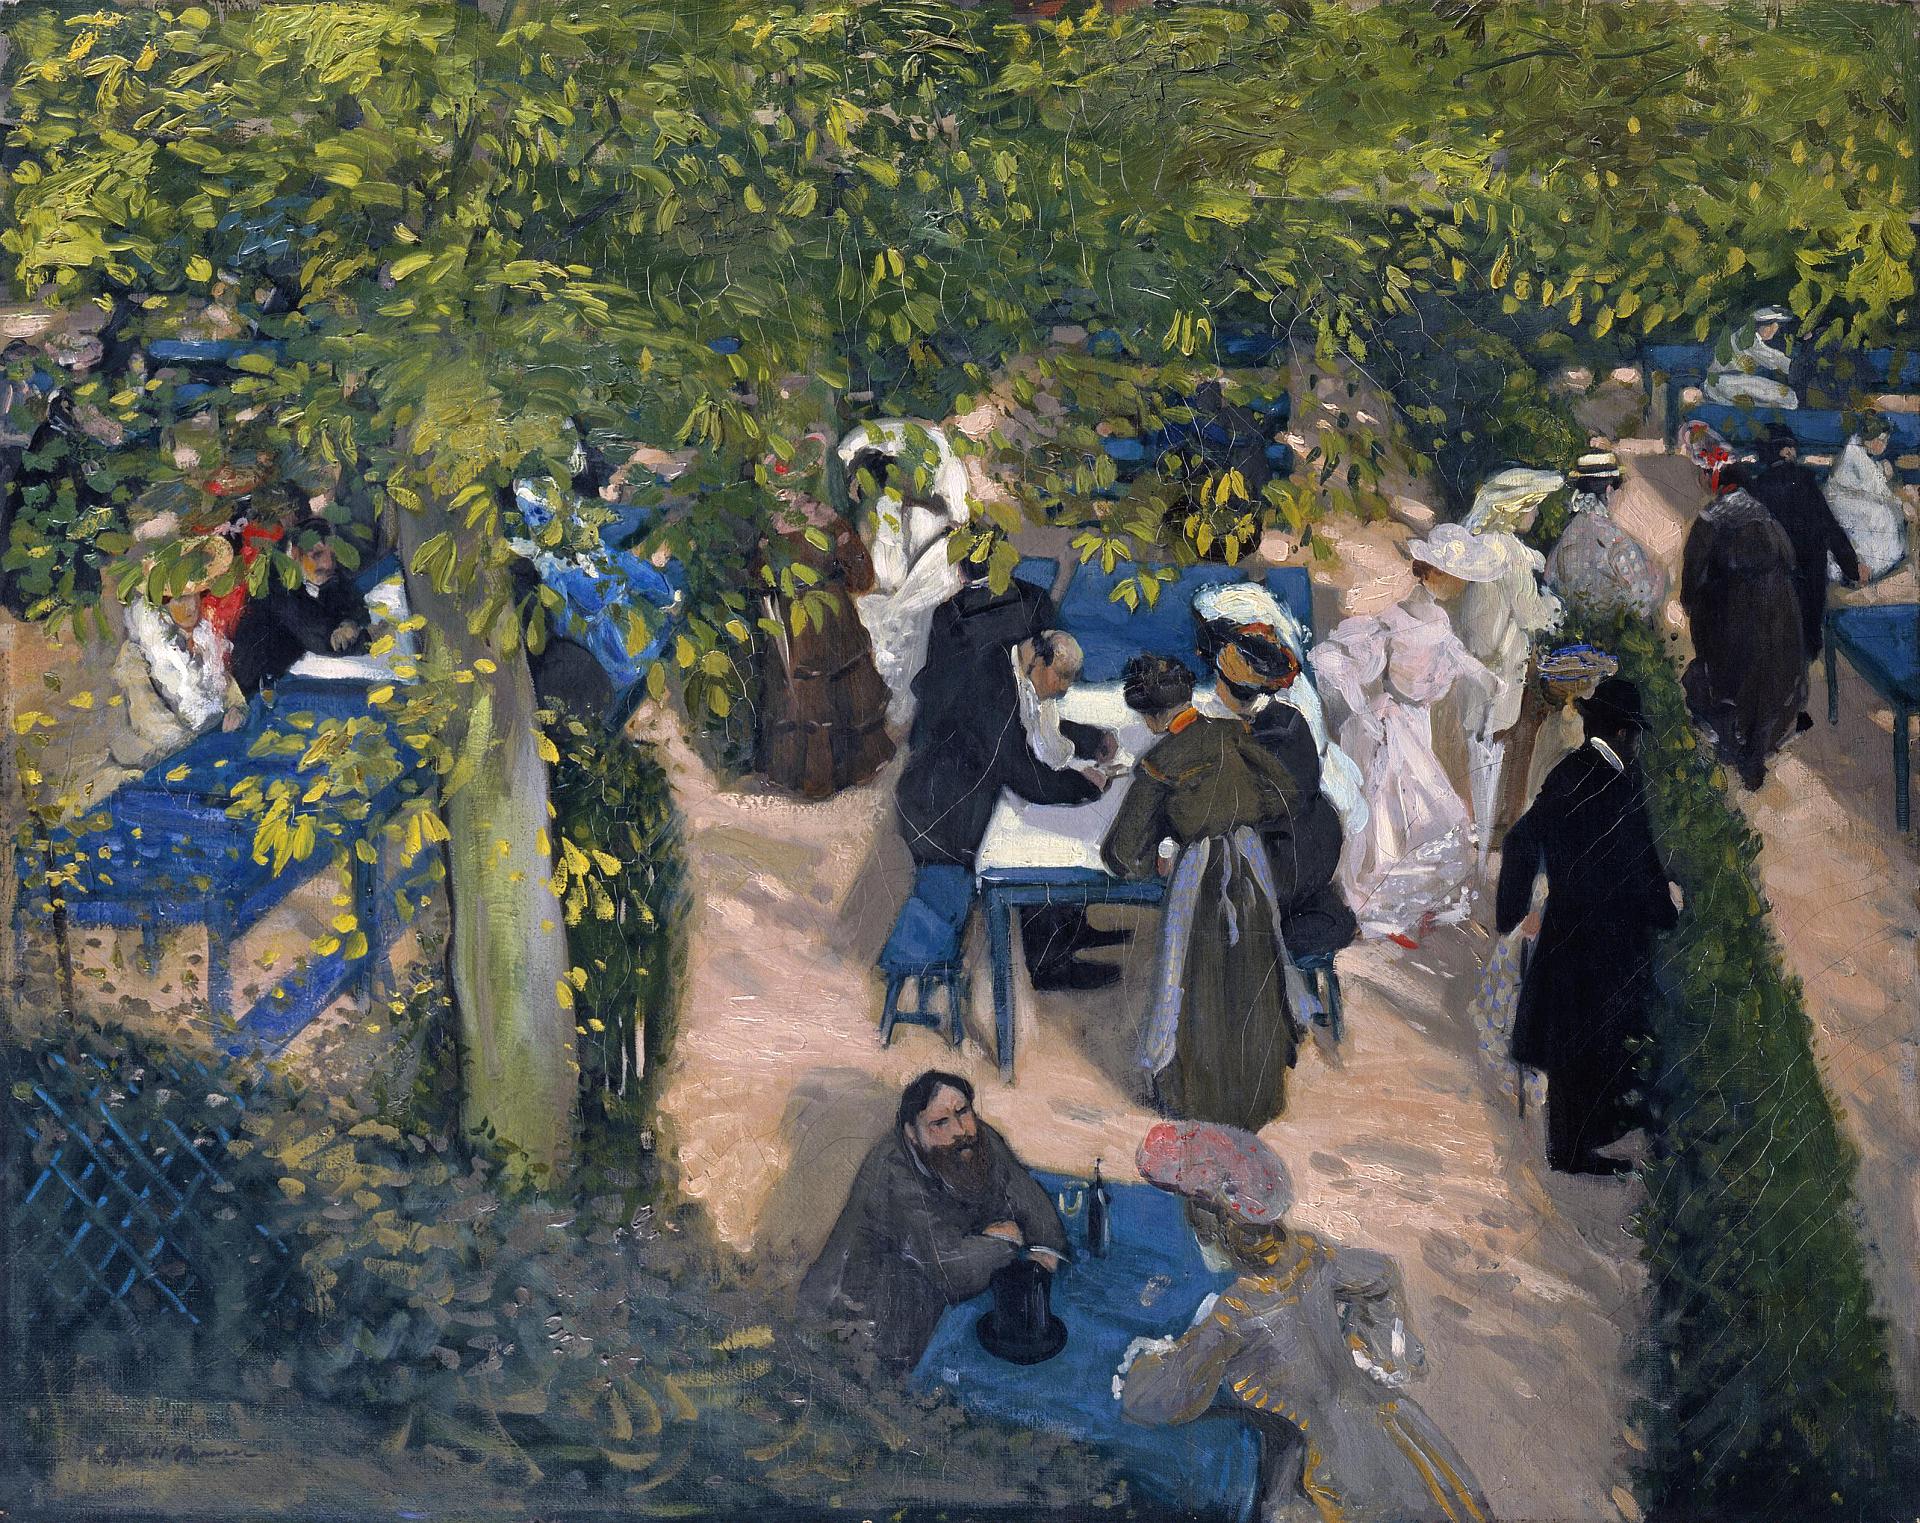 Альфред Генри Маурер. "В саду". 1905. Эрмитаж, Санкт-Петербург.